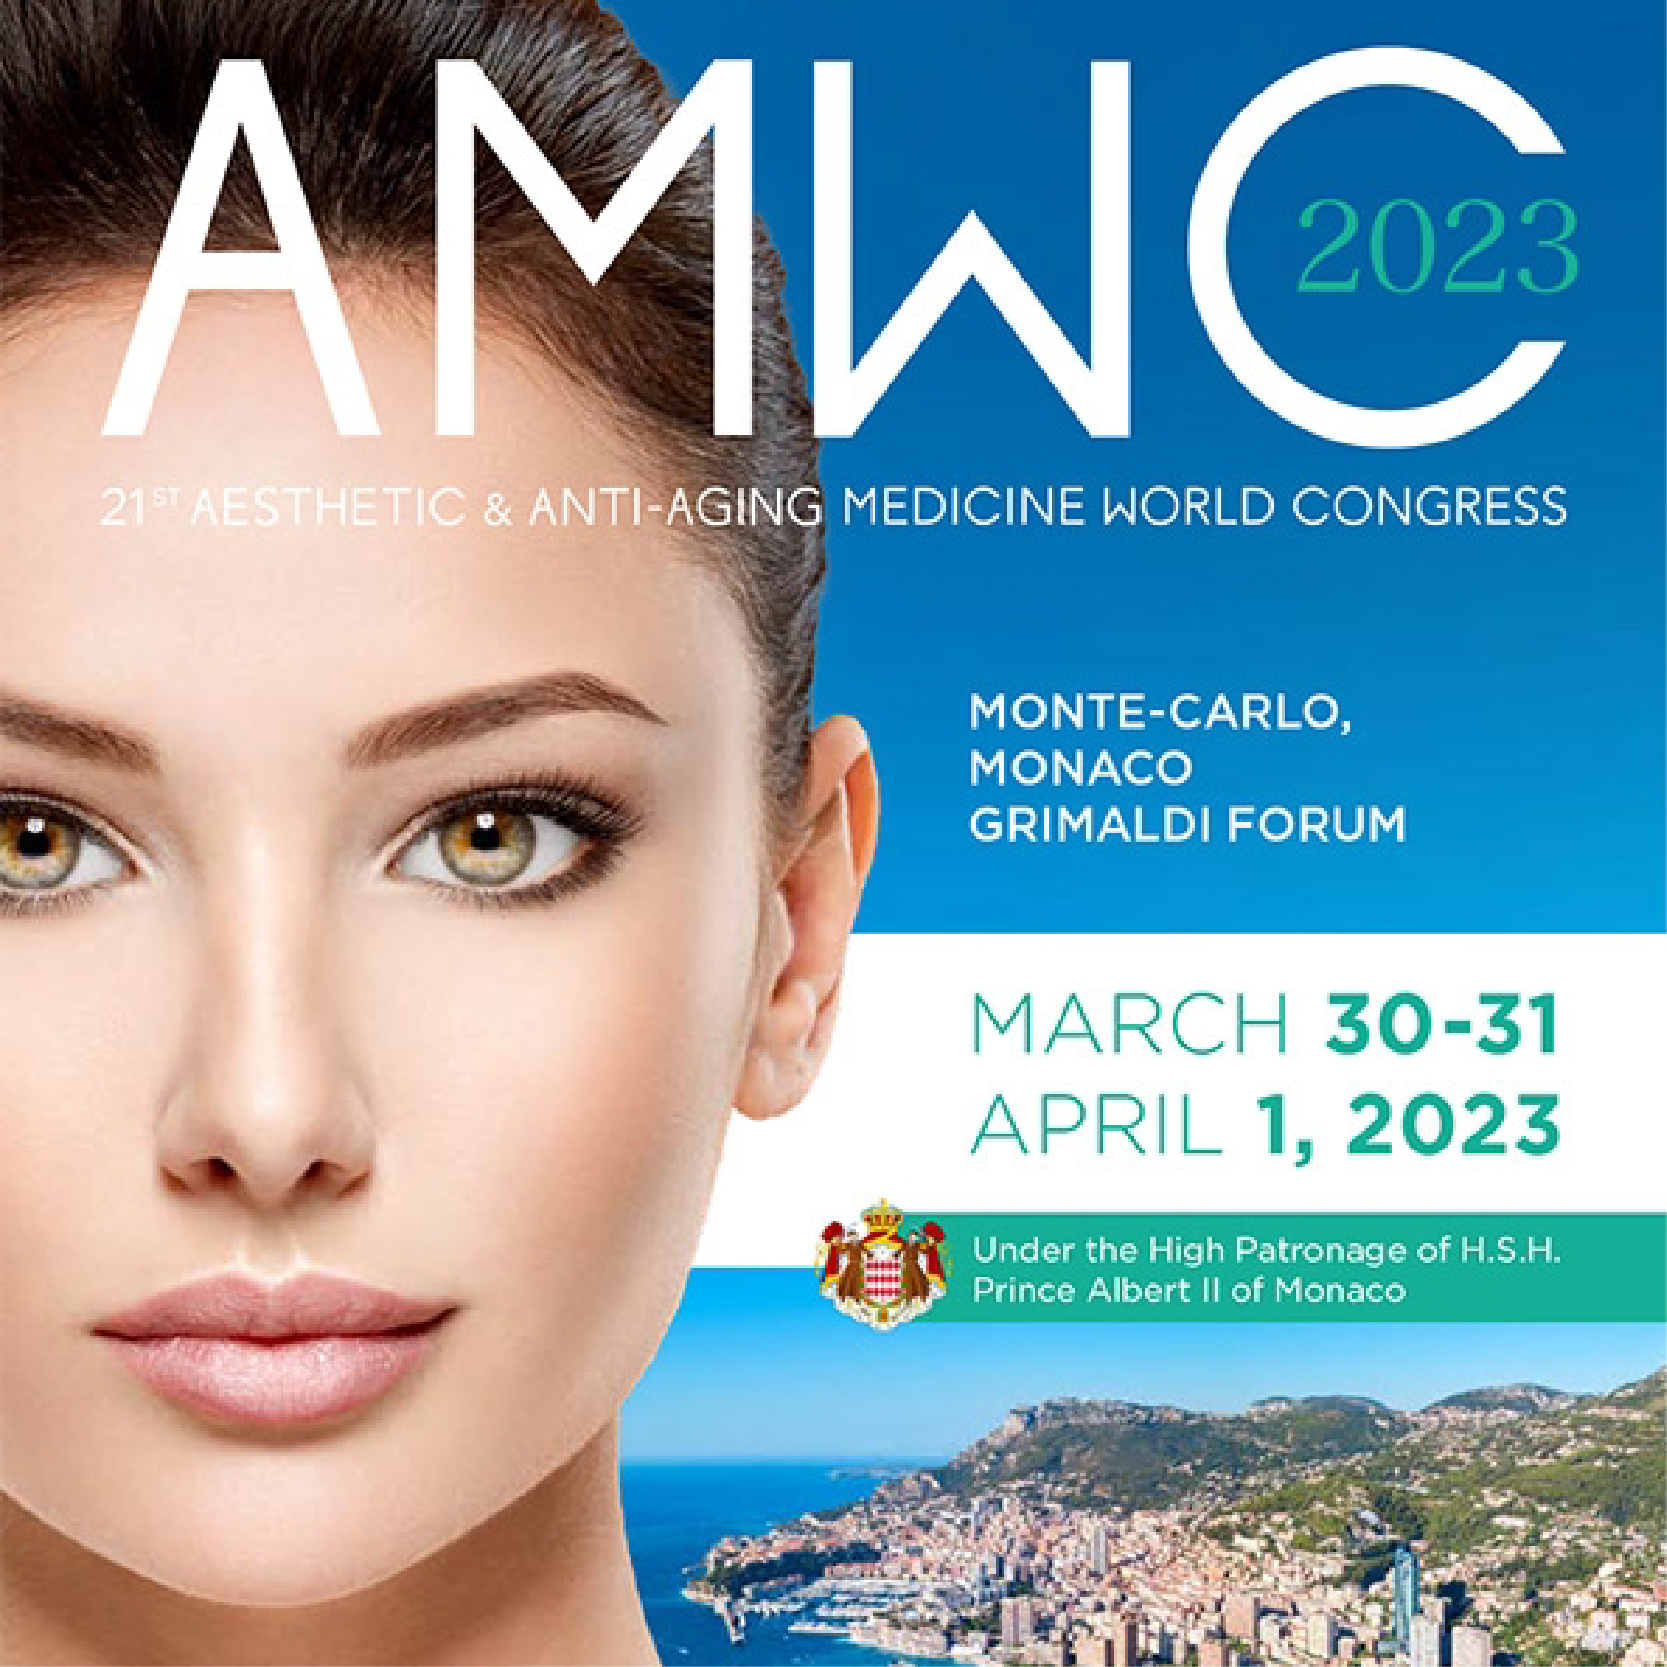 Medflixs 21th Aesthetic & AntiAging Medicine World Congress AMWC 2023